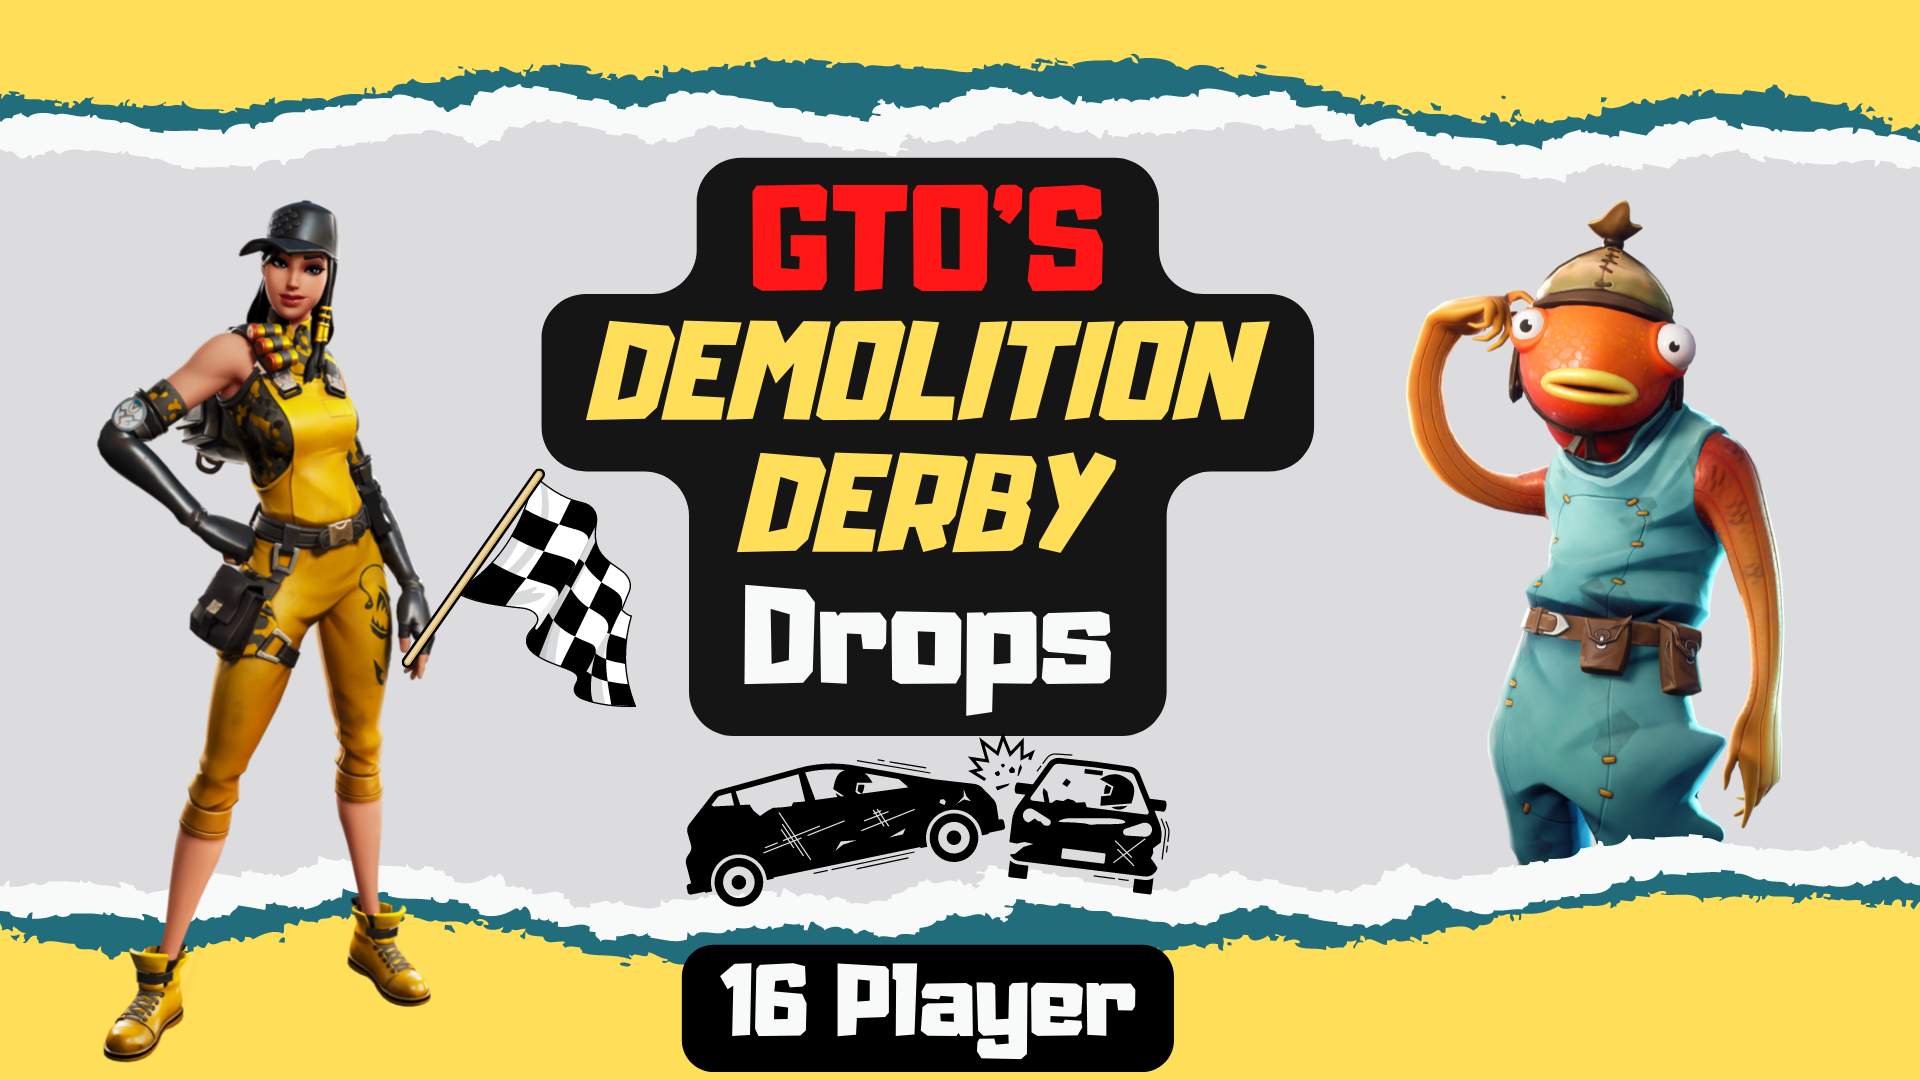 GTO'S DEMOLITION DERBY